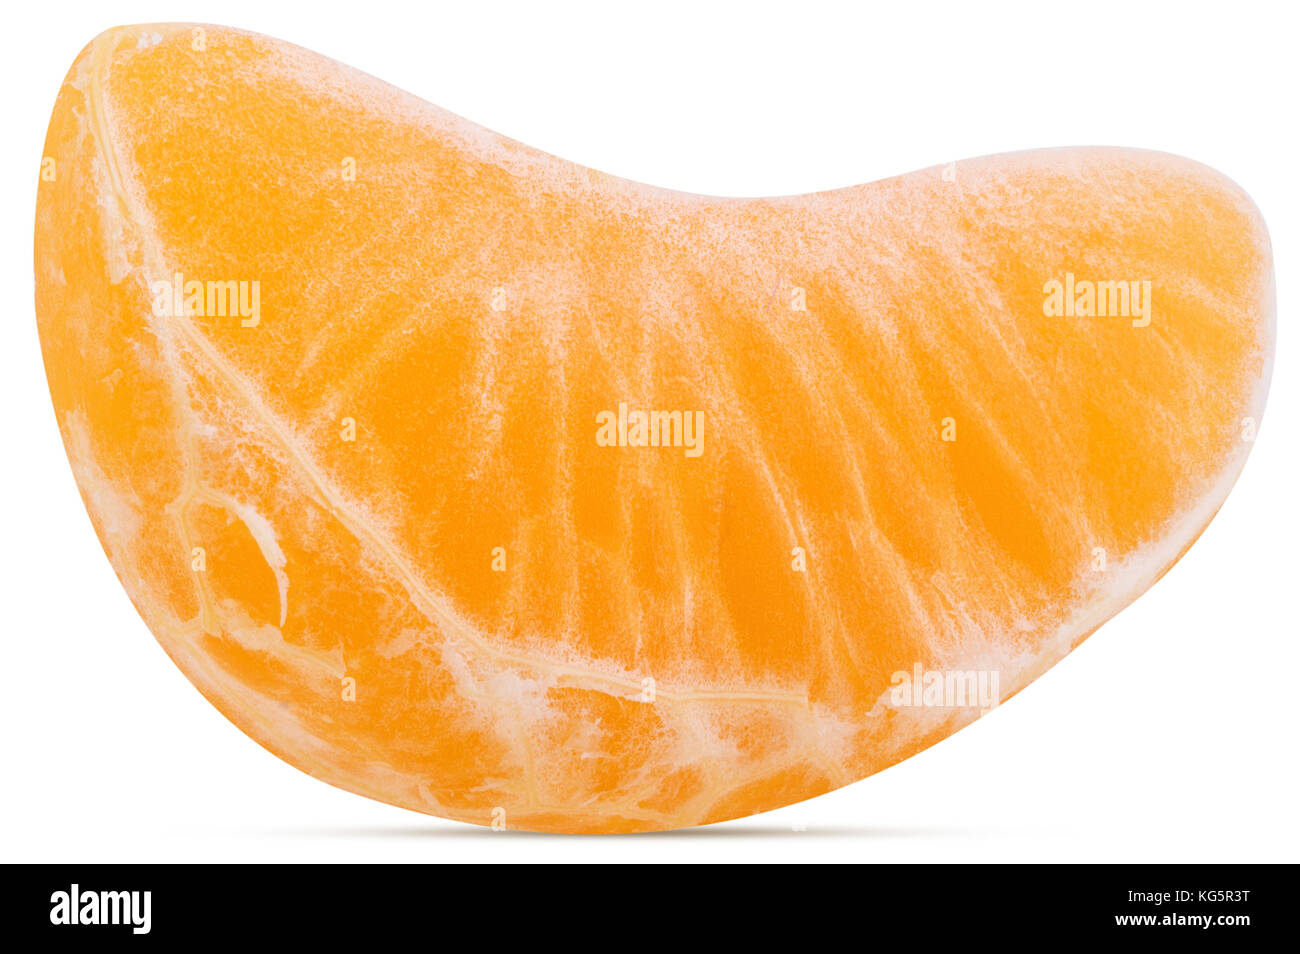 Bright Tangerine on a Clean Background. Tangerine Slices. Peeled Tangerine.  Citrus in Flight. Mandarin Peel Stock Image - Image of juicy, fruits:  207471359